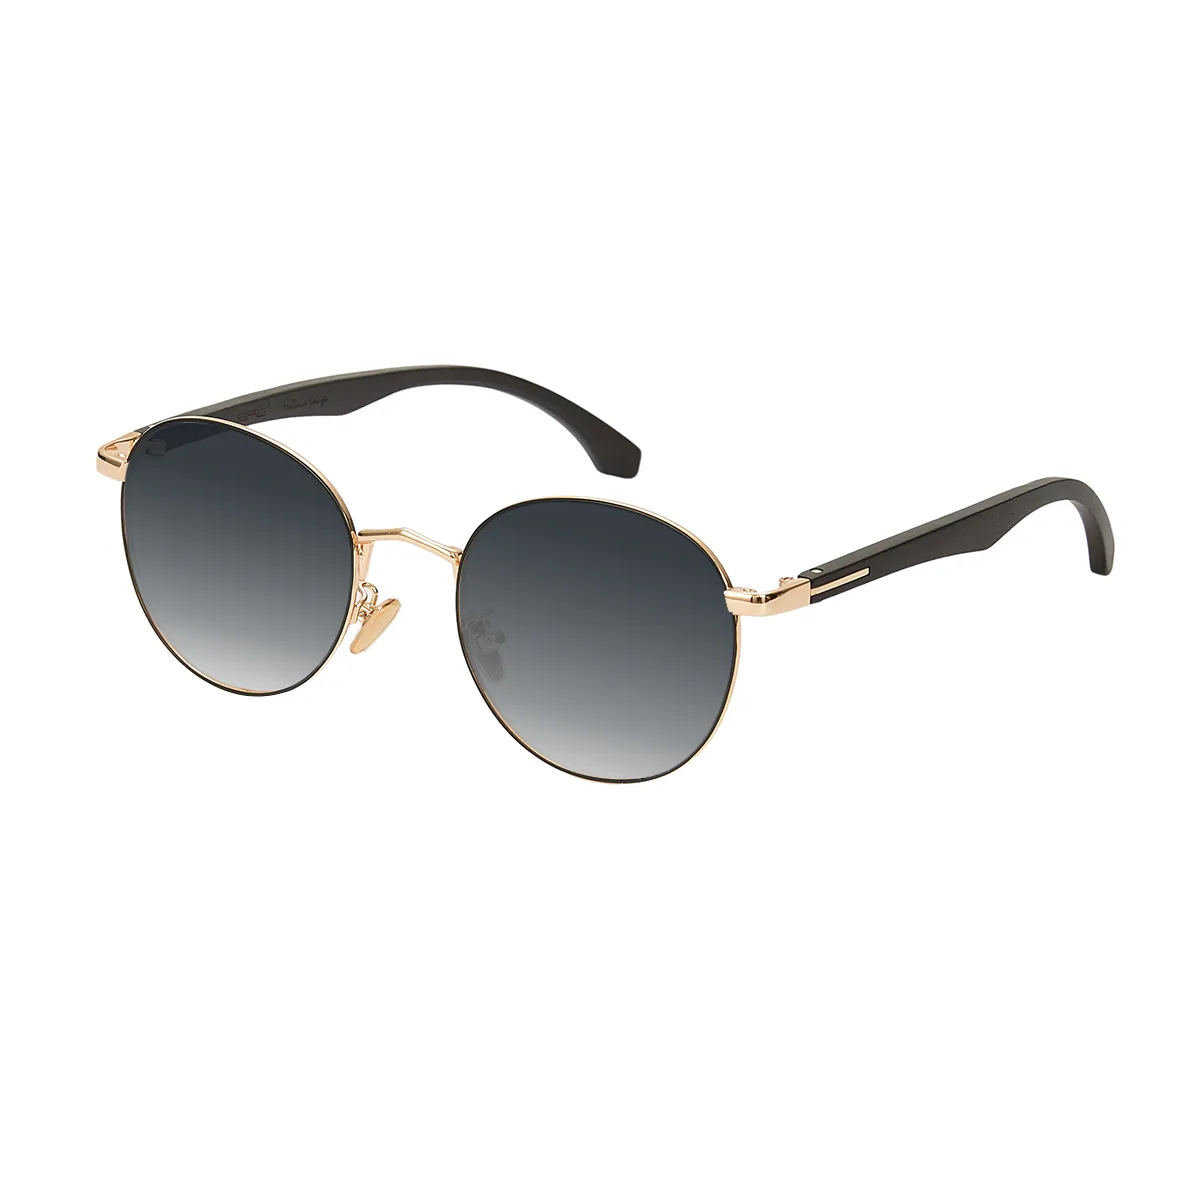 Harold - Round Black-Gold Sunglasses for Men